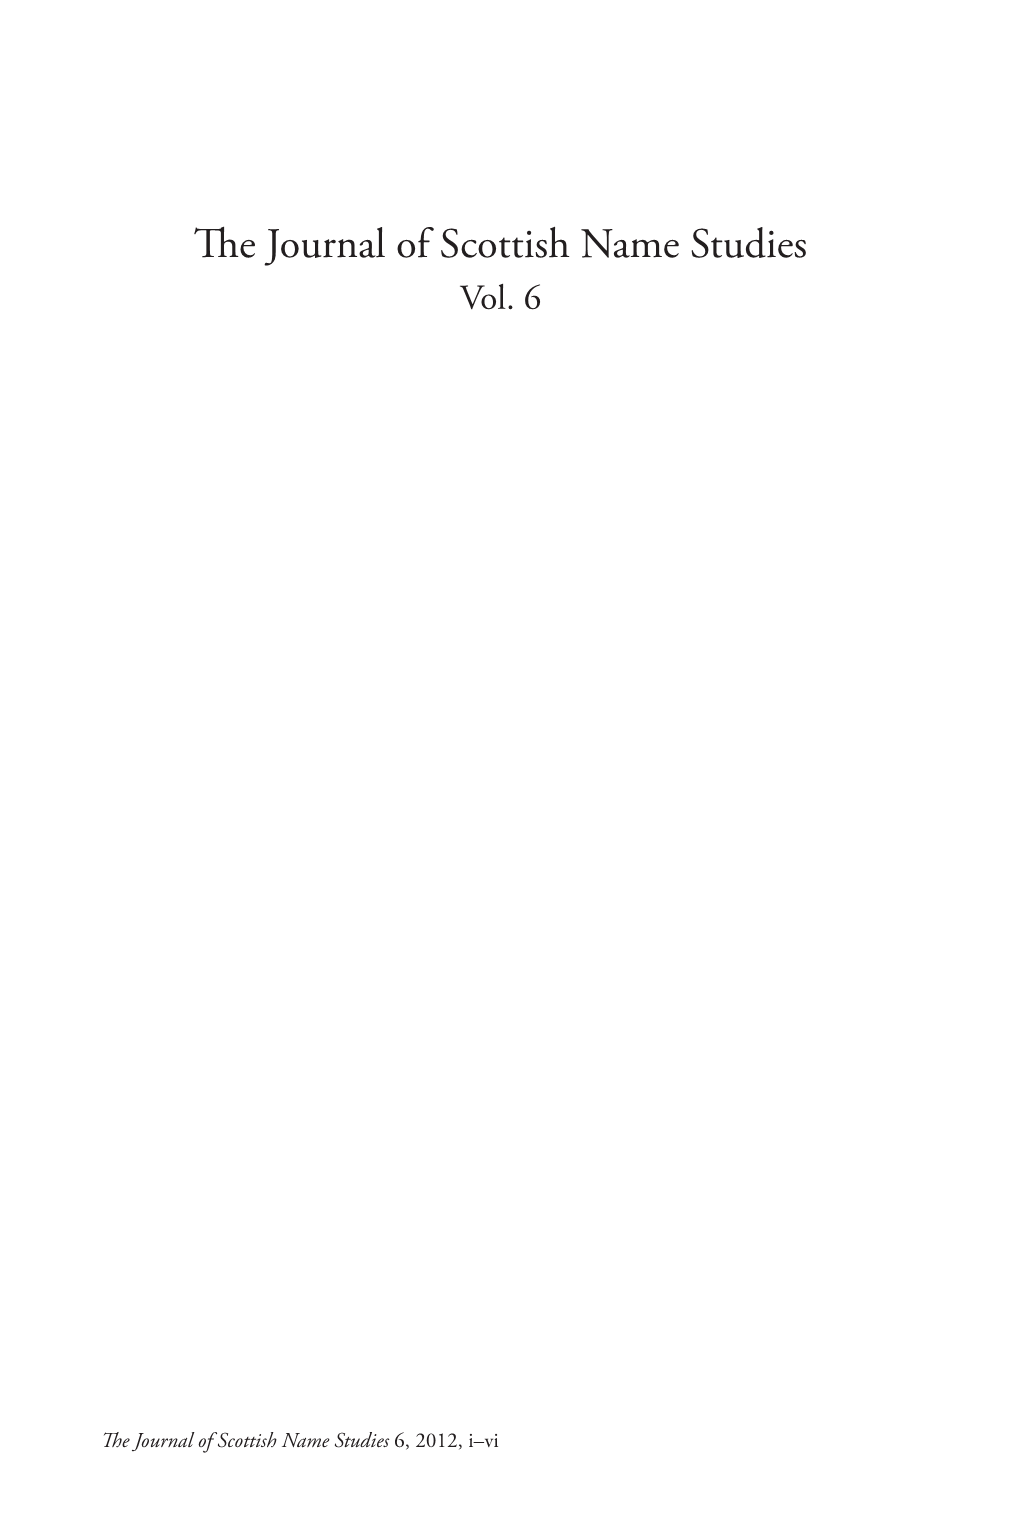 The Journal of Scottish Name Studies Vol